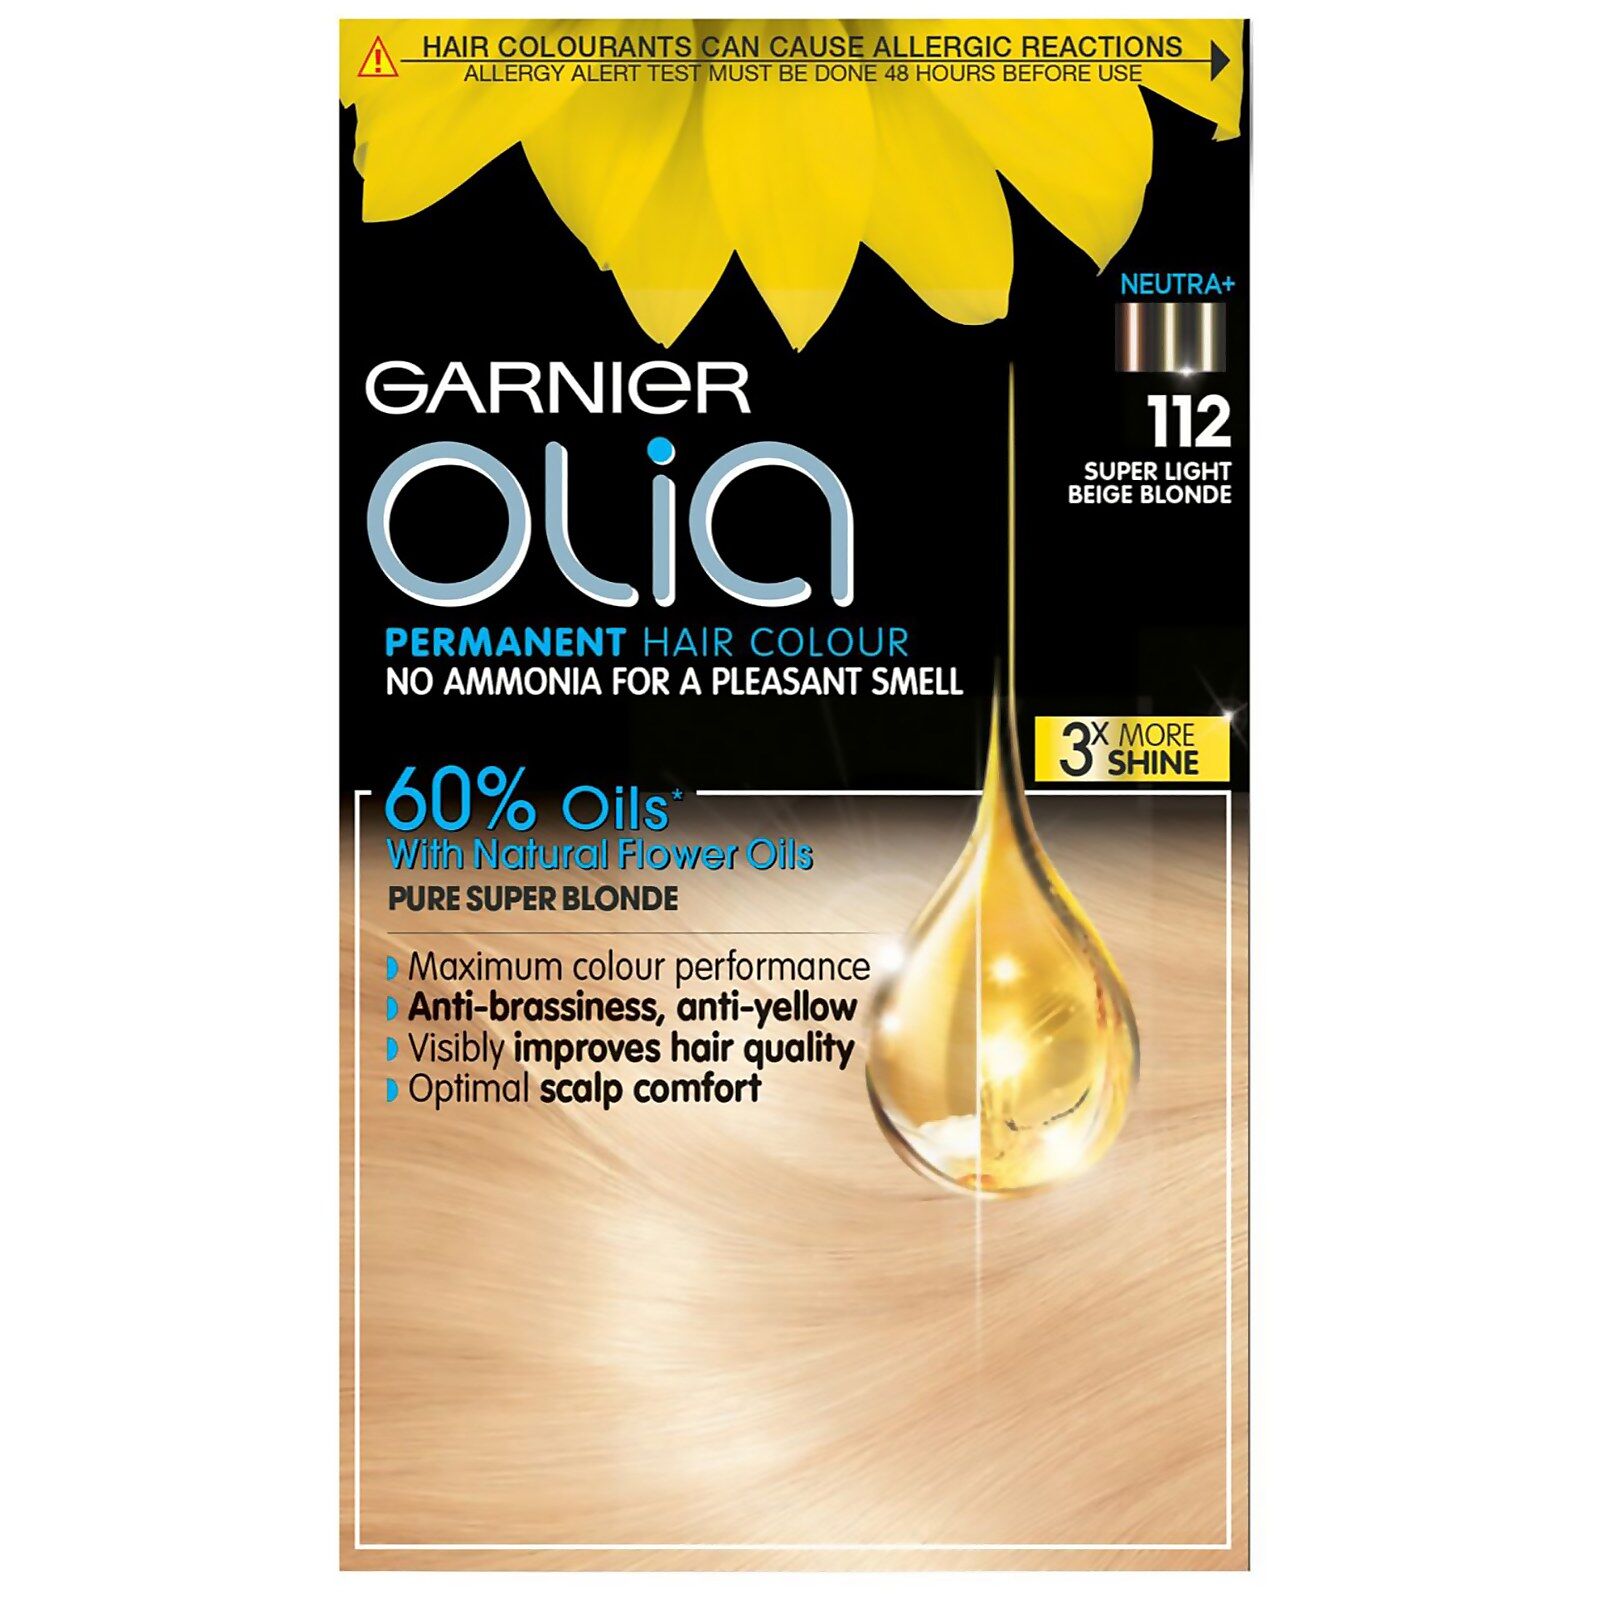 Garnier Olia Permanent Hair Dye (Various Shades) - 112 Super Light Beige Blonde